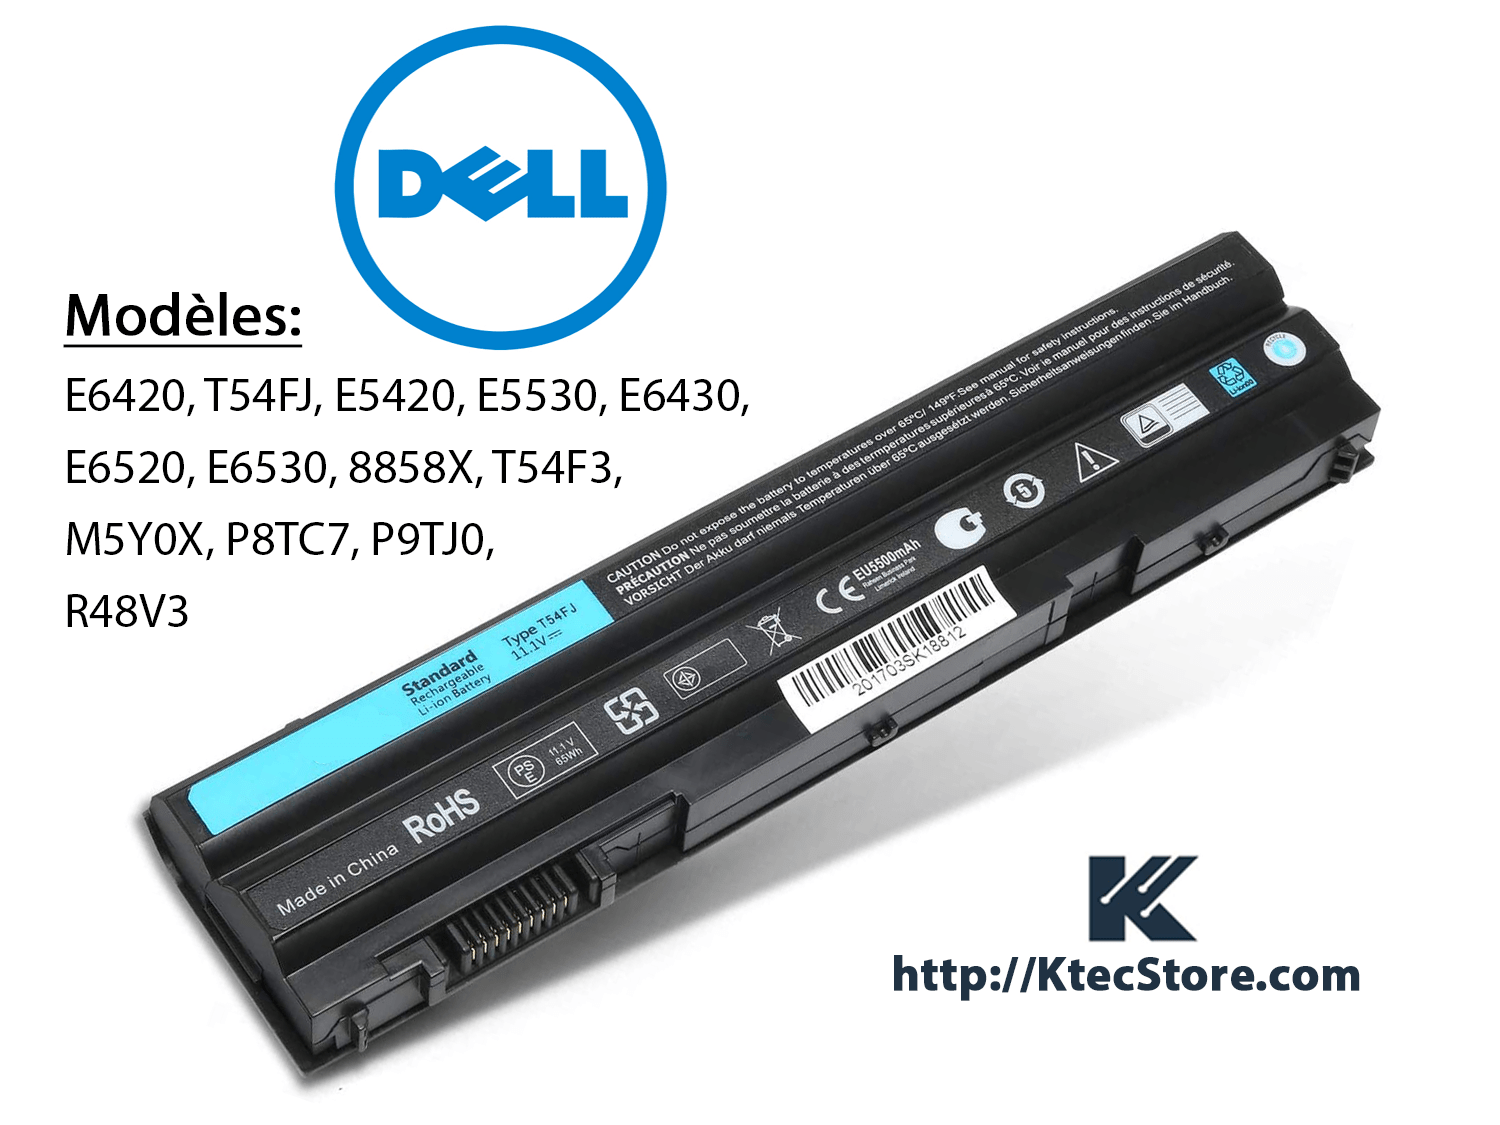 Batterie pour DELL E6420, T54FJ, E5420, E5530, E6430, E6520 - KtecStore